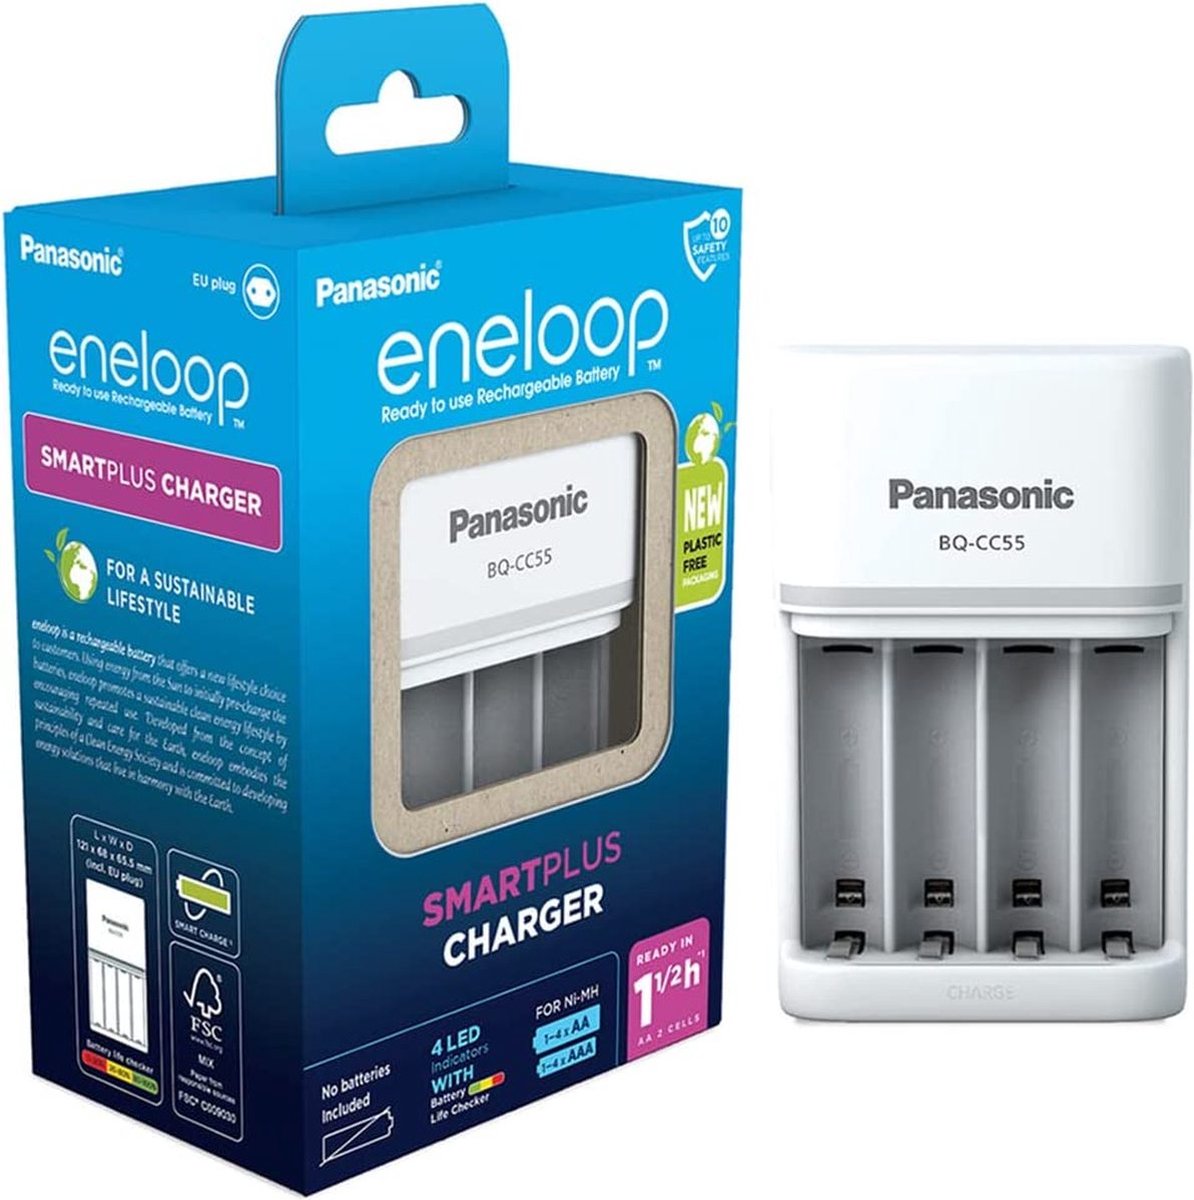 Panasonic Eneloop Smart en Snelle Oplader (BQ-CC55E) - wit